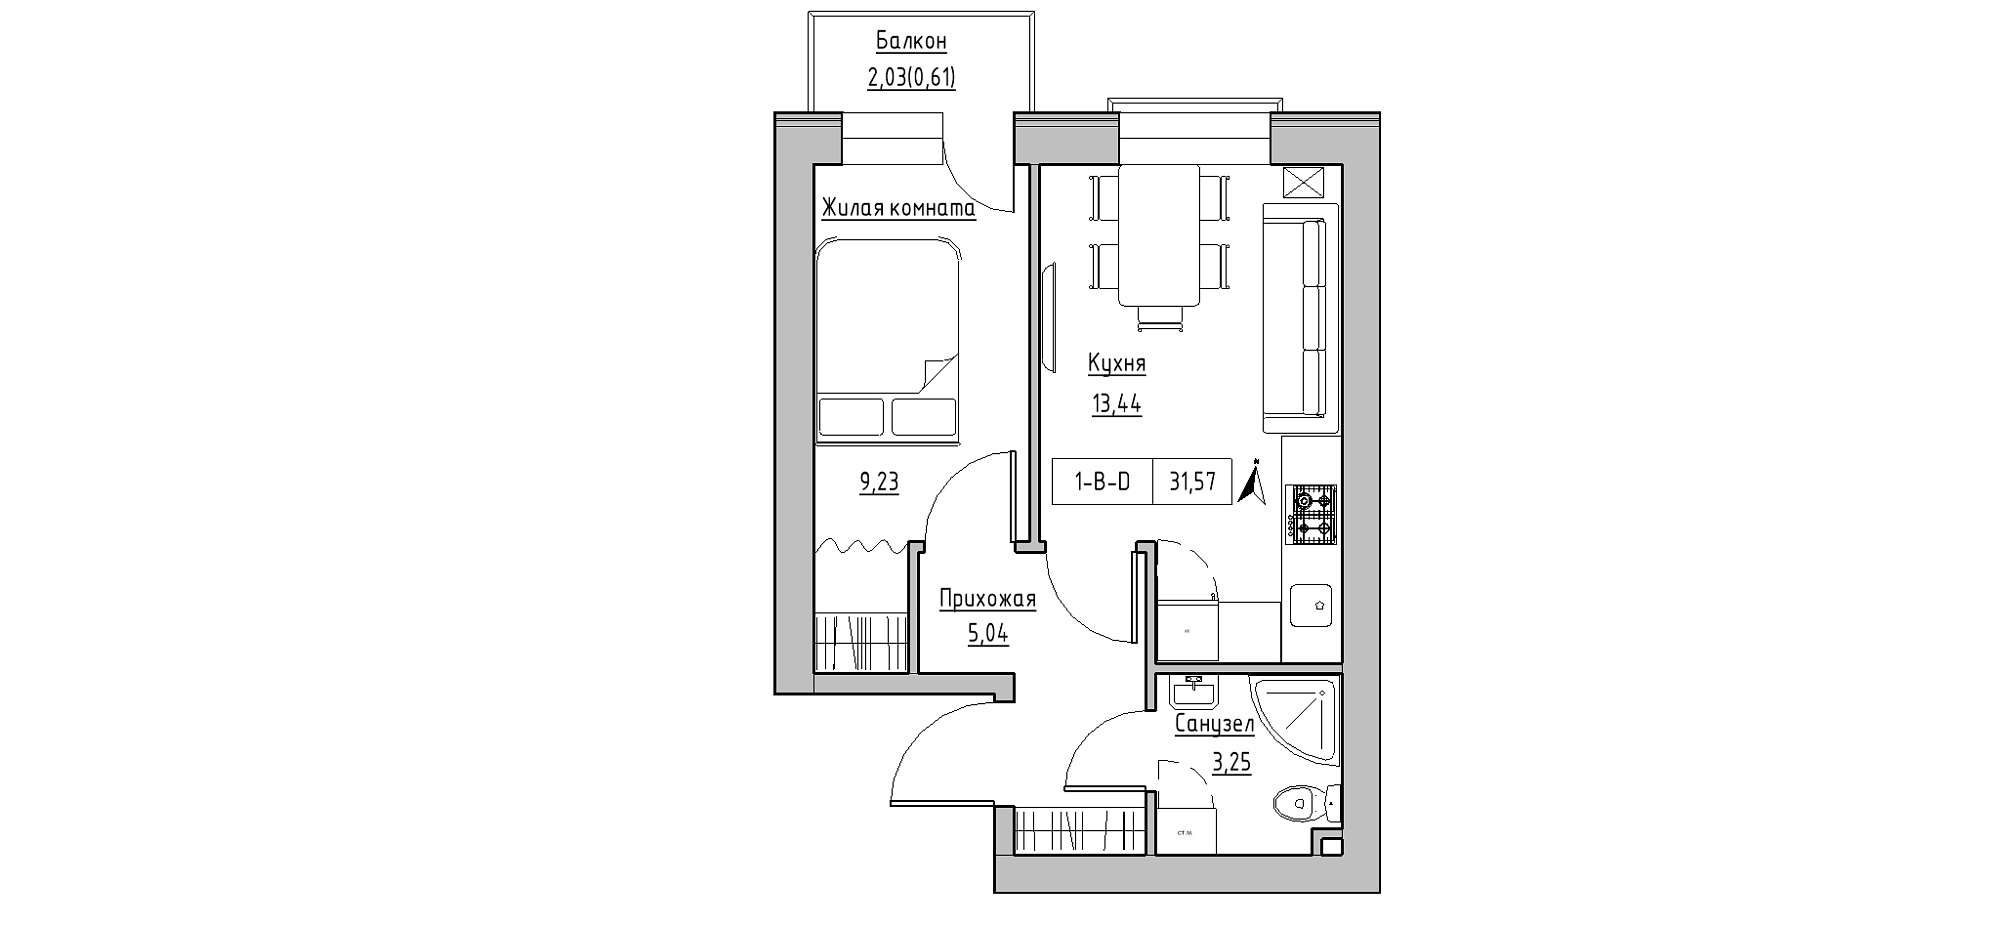 Planning 1-rm flats area 31.57m2, KS-020-03/0003.